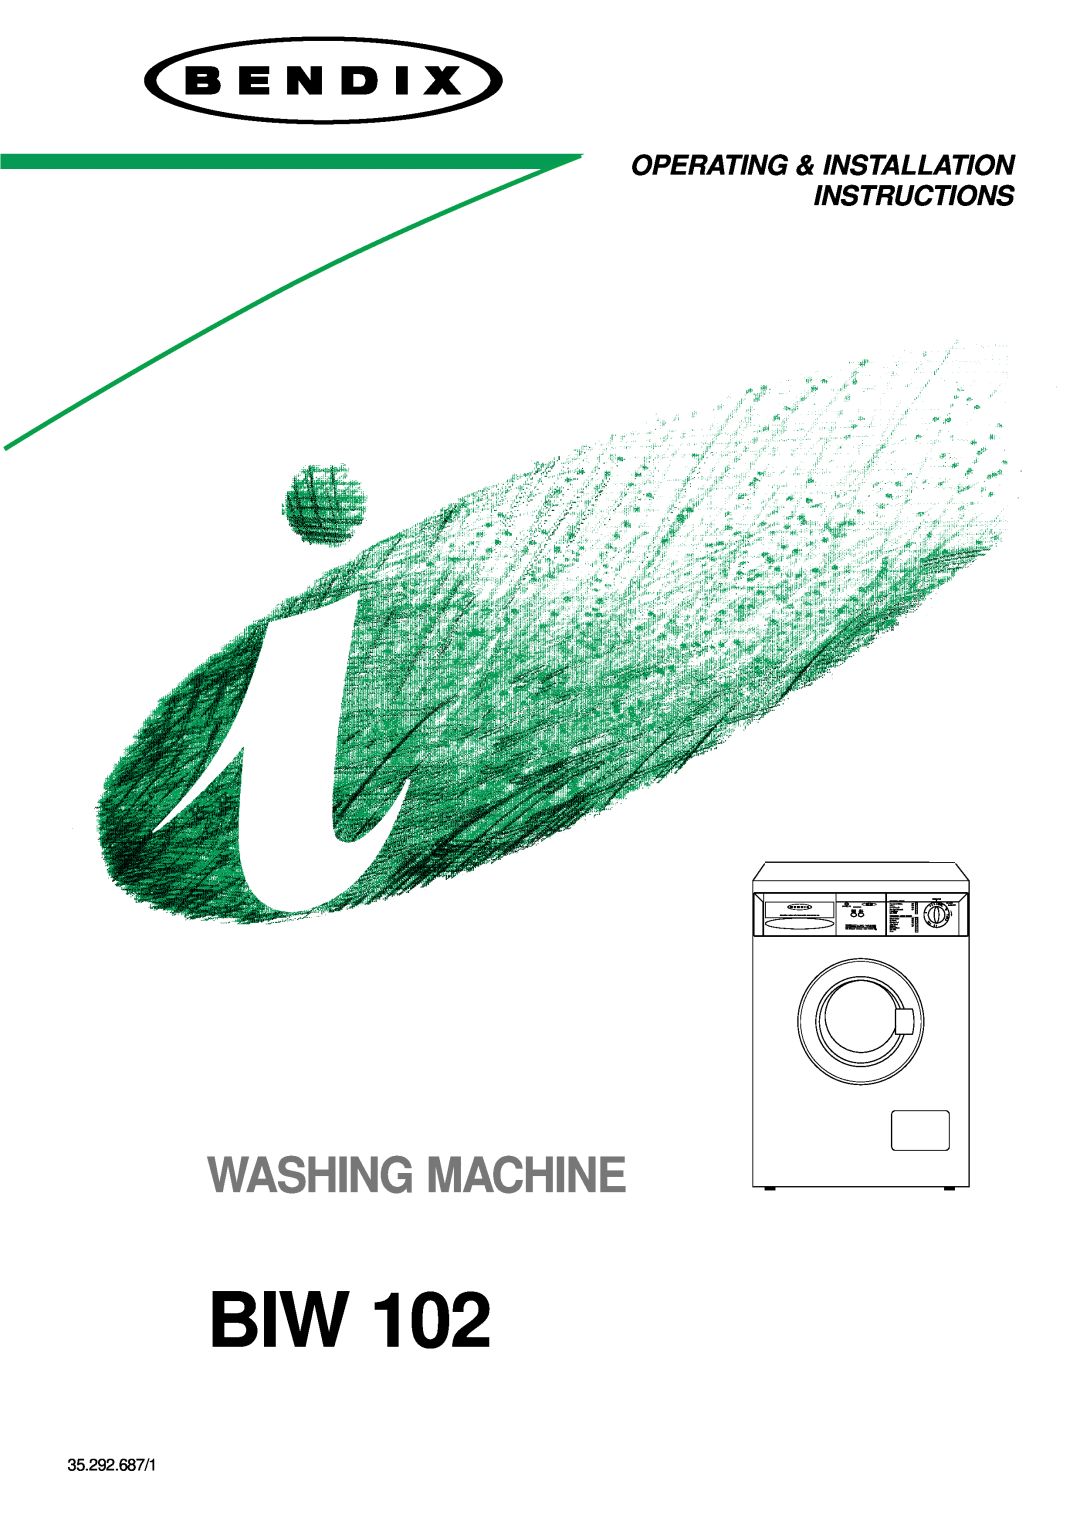 Tricity Bendix BIW 102 installation instructions Washing Machine, Operating & Installation Instructions, 35.292.687/1 